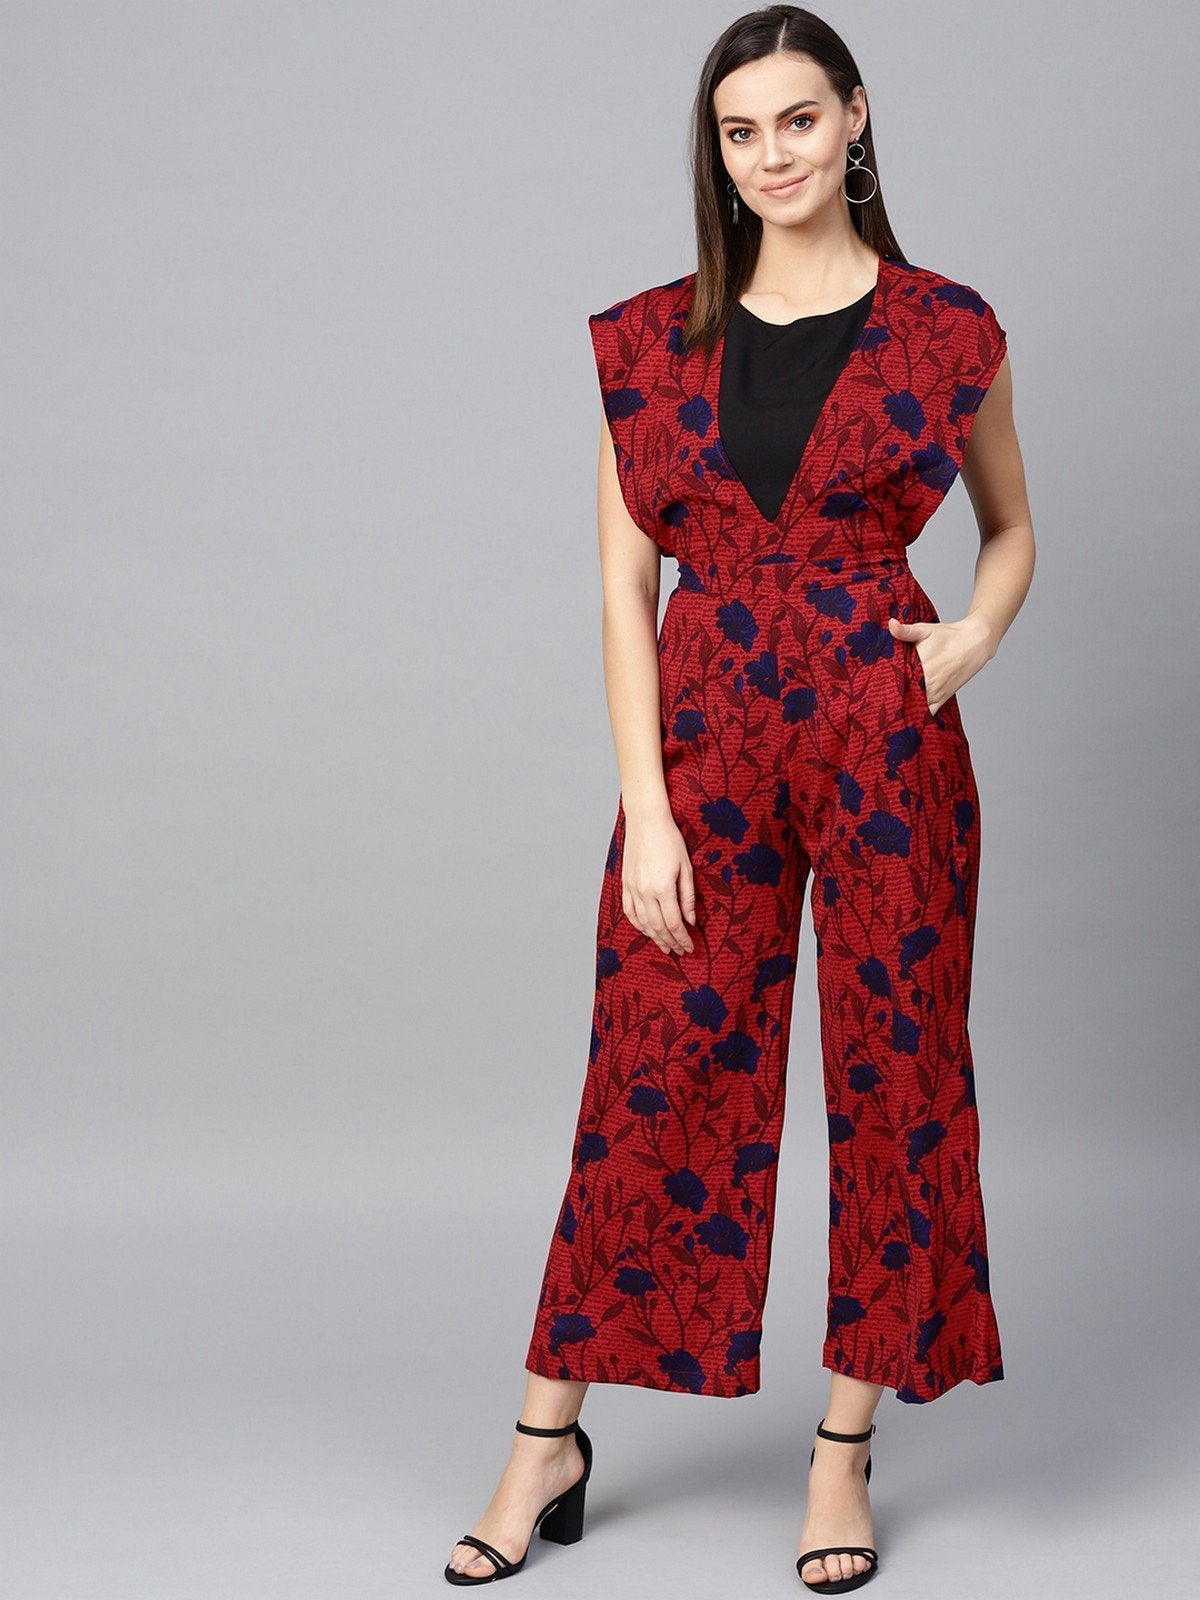 Women's Floral Printed Jumpsuit - Pannkh